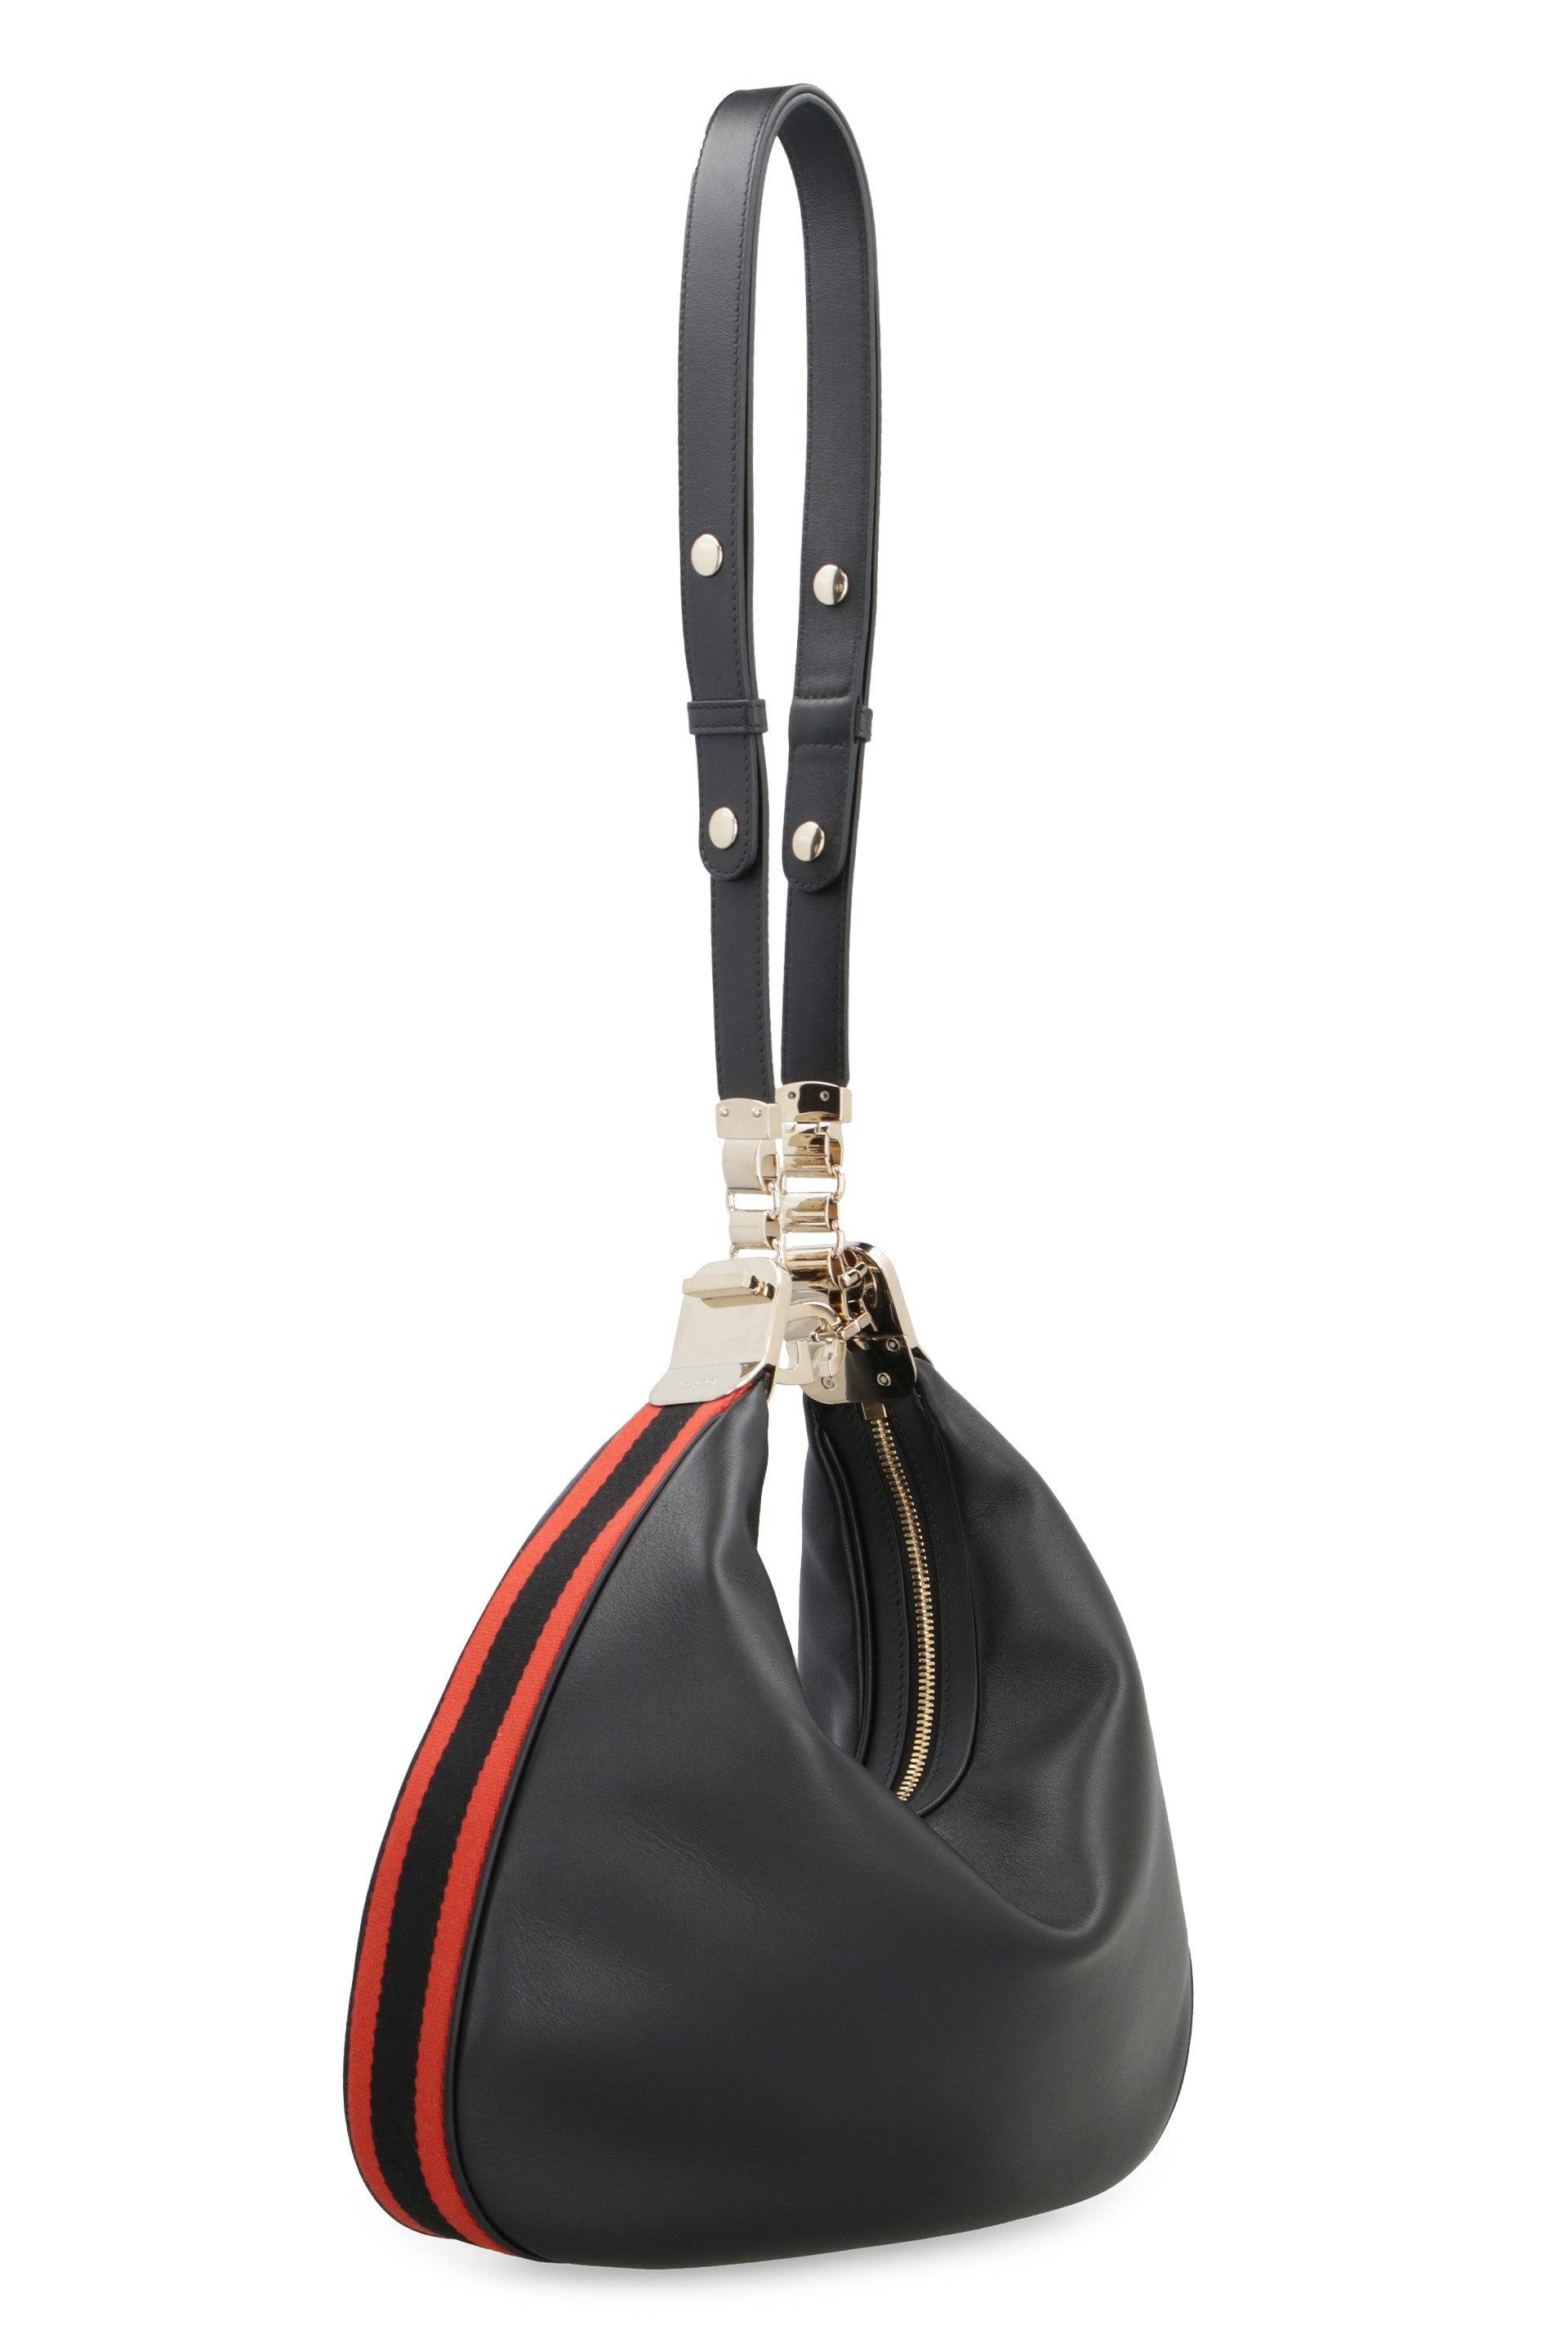 Gucci Attache medium shoulder bag in black leather